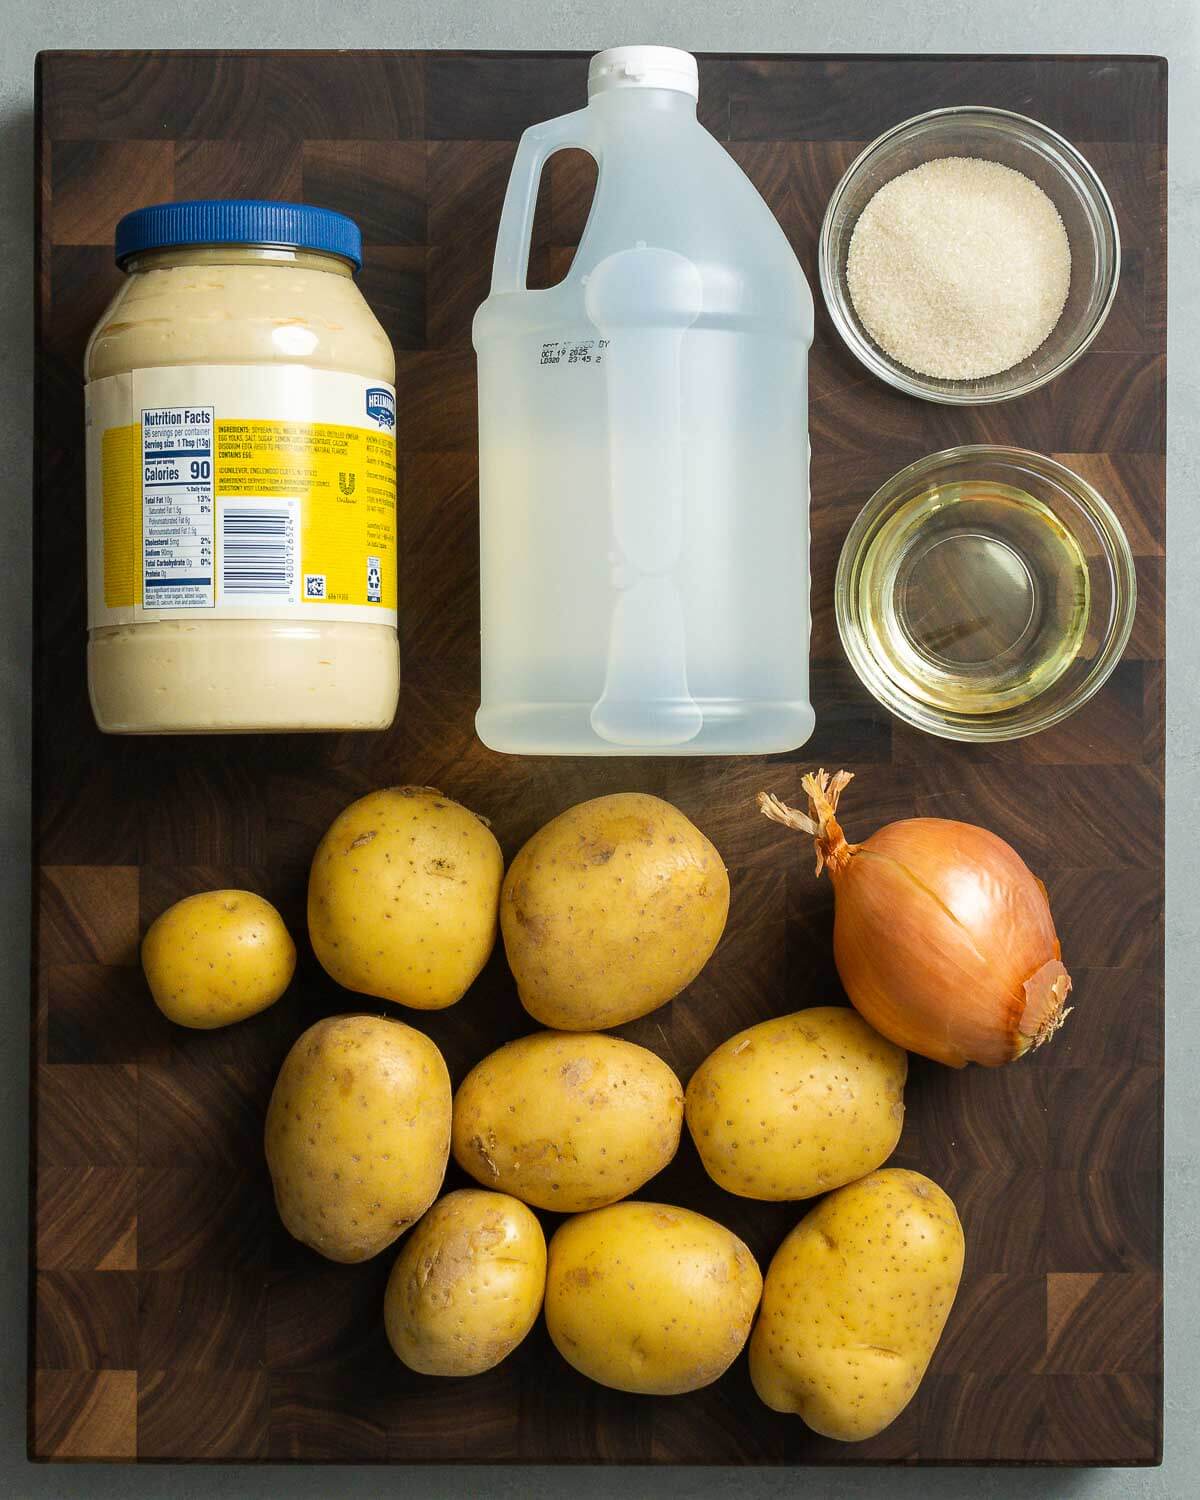 Recipe ingredients shown: mayonnaise, vinegar, sugar, vegetable oil, potatoes, and onion.